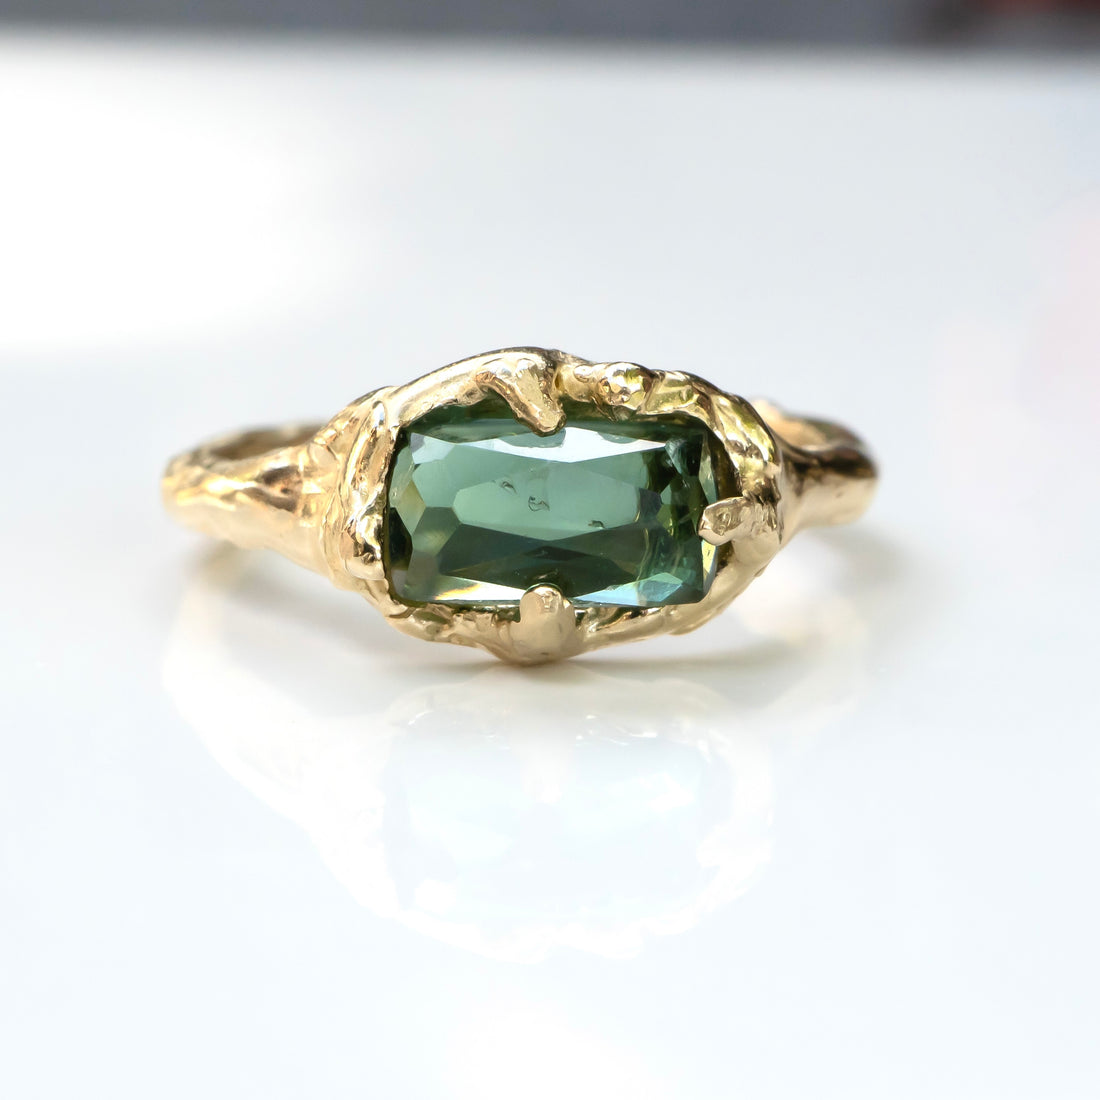 Mermaid Green Tourmaline Ring in 14k Gold Setting